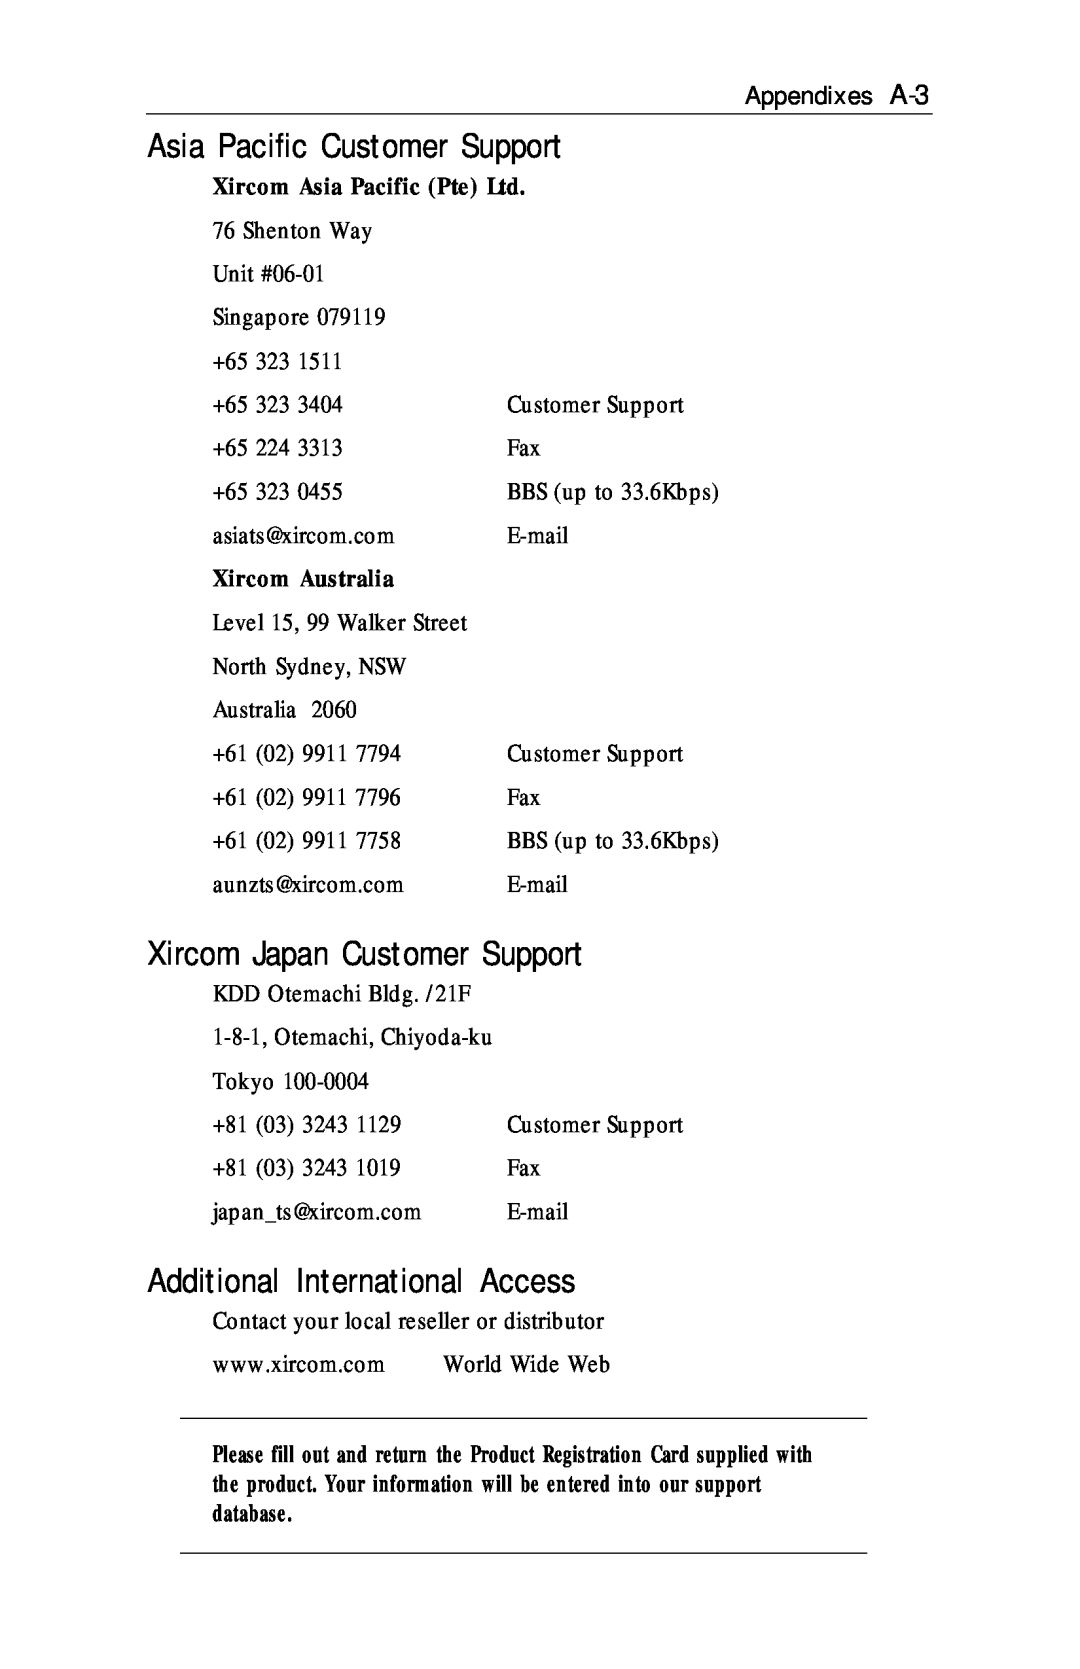 Xircom RM56V1 manual Asia Pacific Customer Support, Xircom Japan Customer Support, Additional International Access 